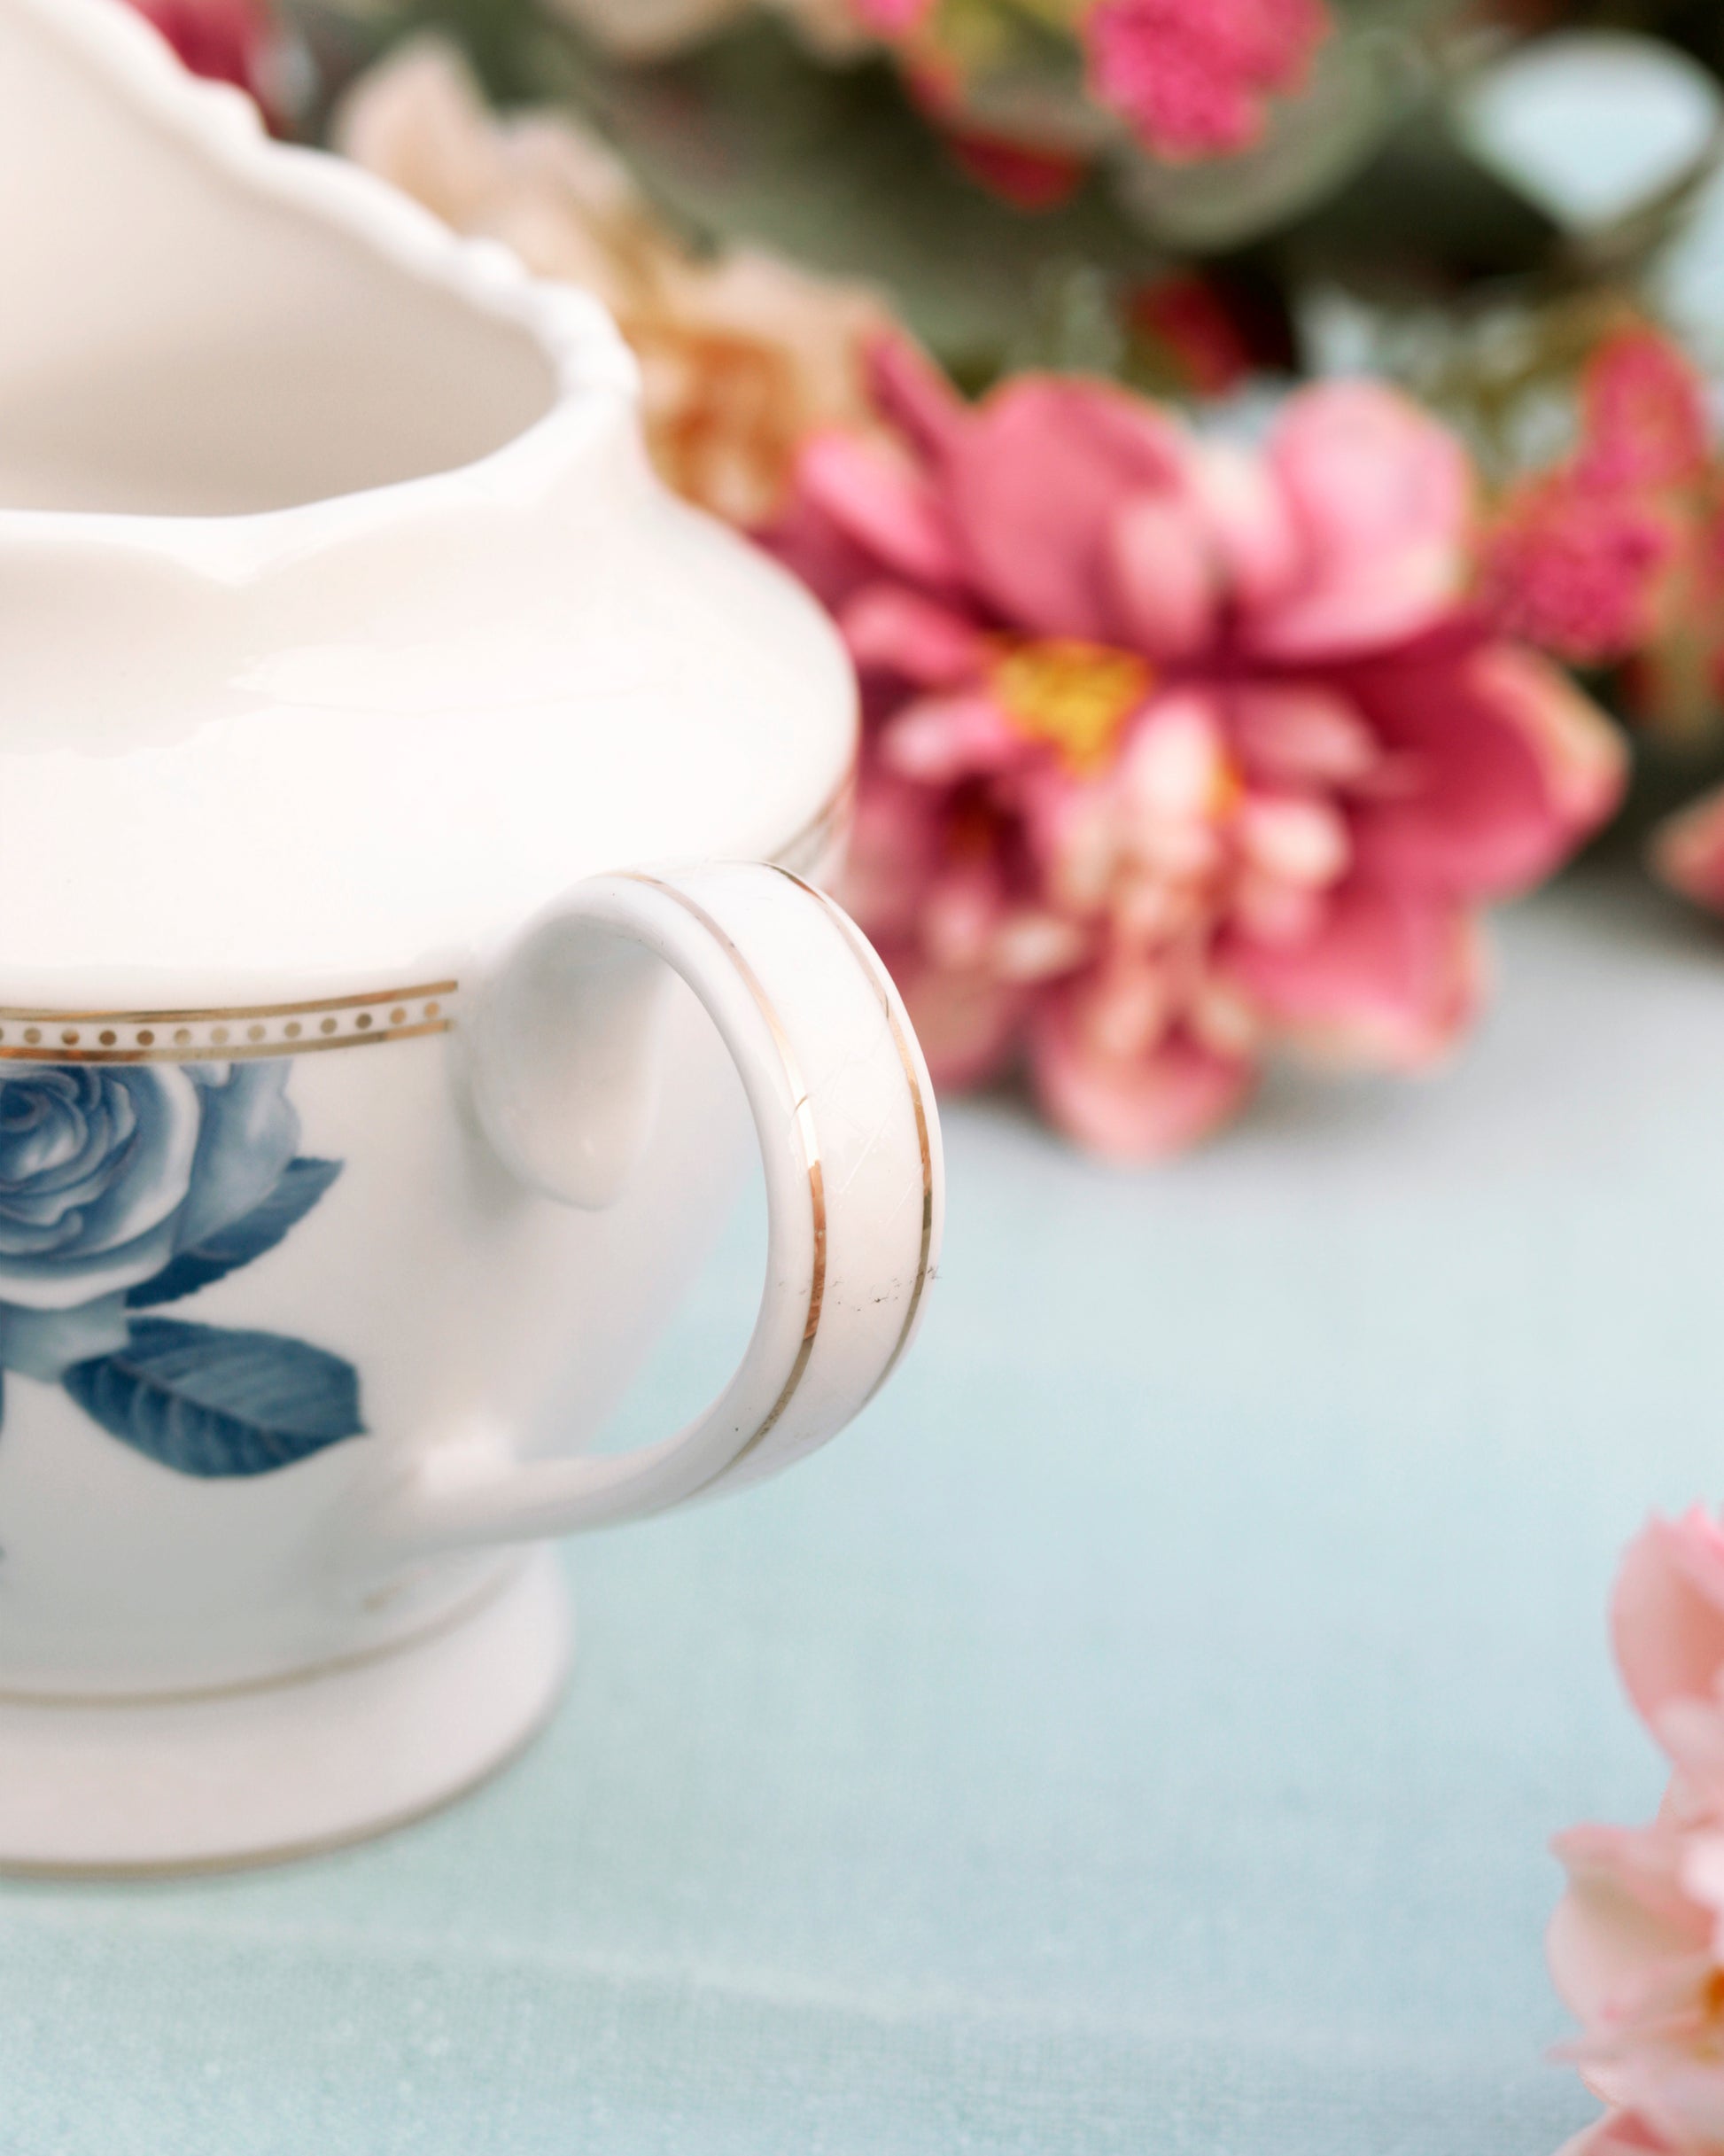 Azure Gold 15 Pcs Tea Set - Vigneto